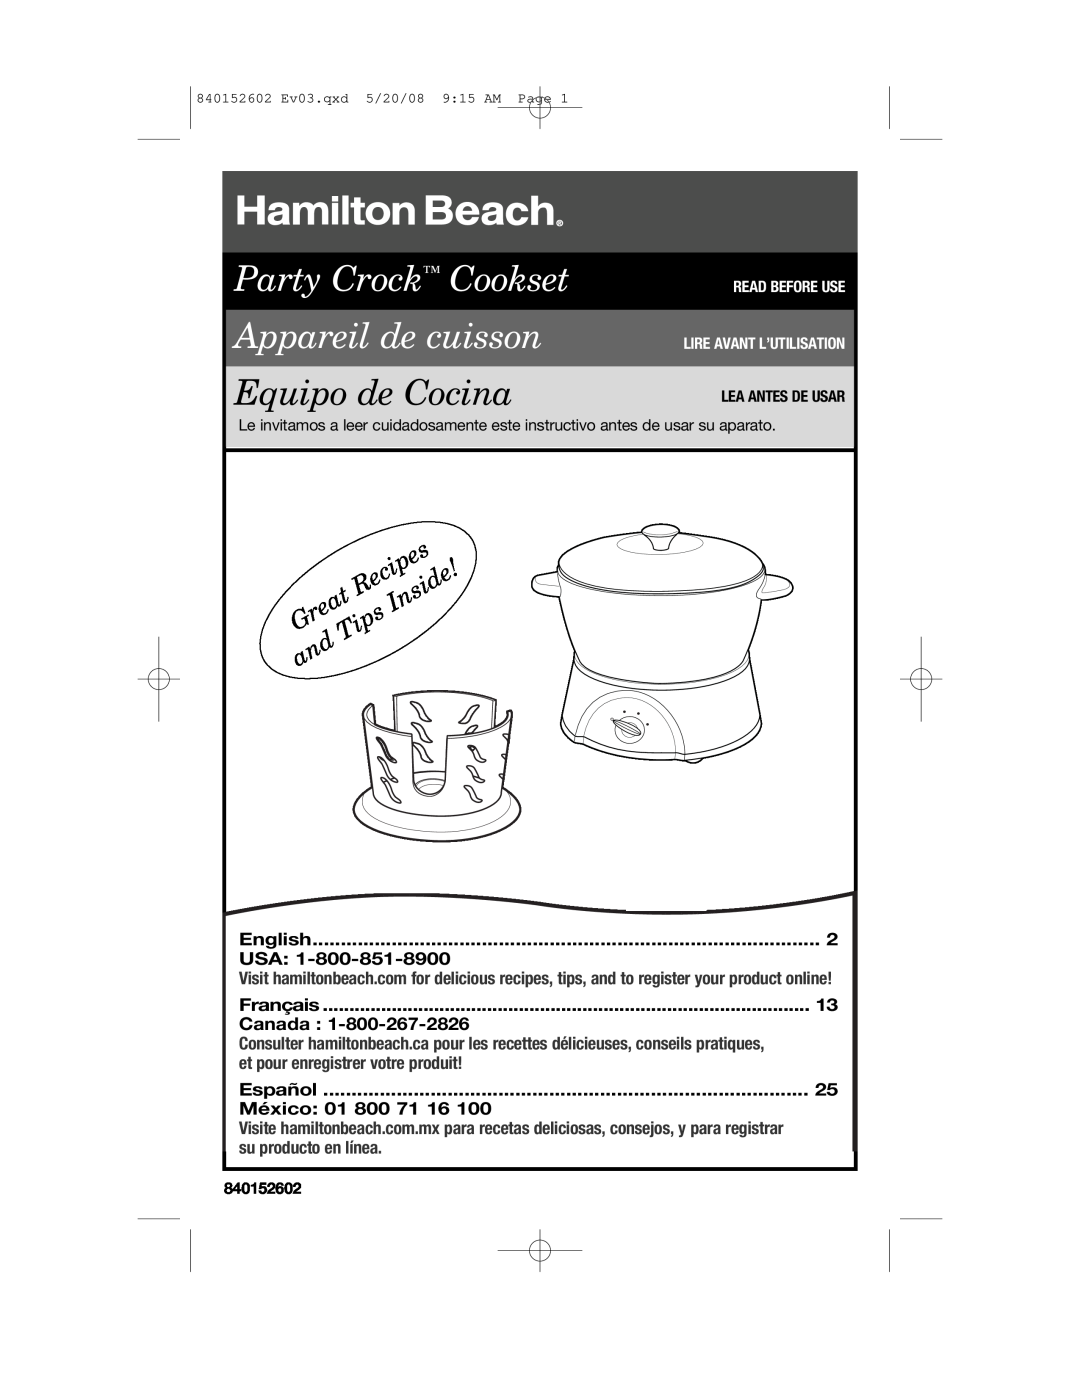 Hamilton Beach 840152602 manual Recipes, Great, Inside, Tips, English, Usa, Français, Canada, Español, México 